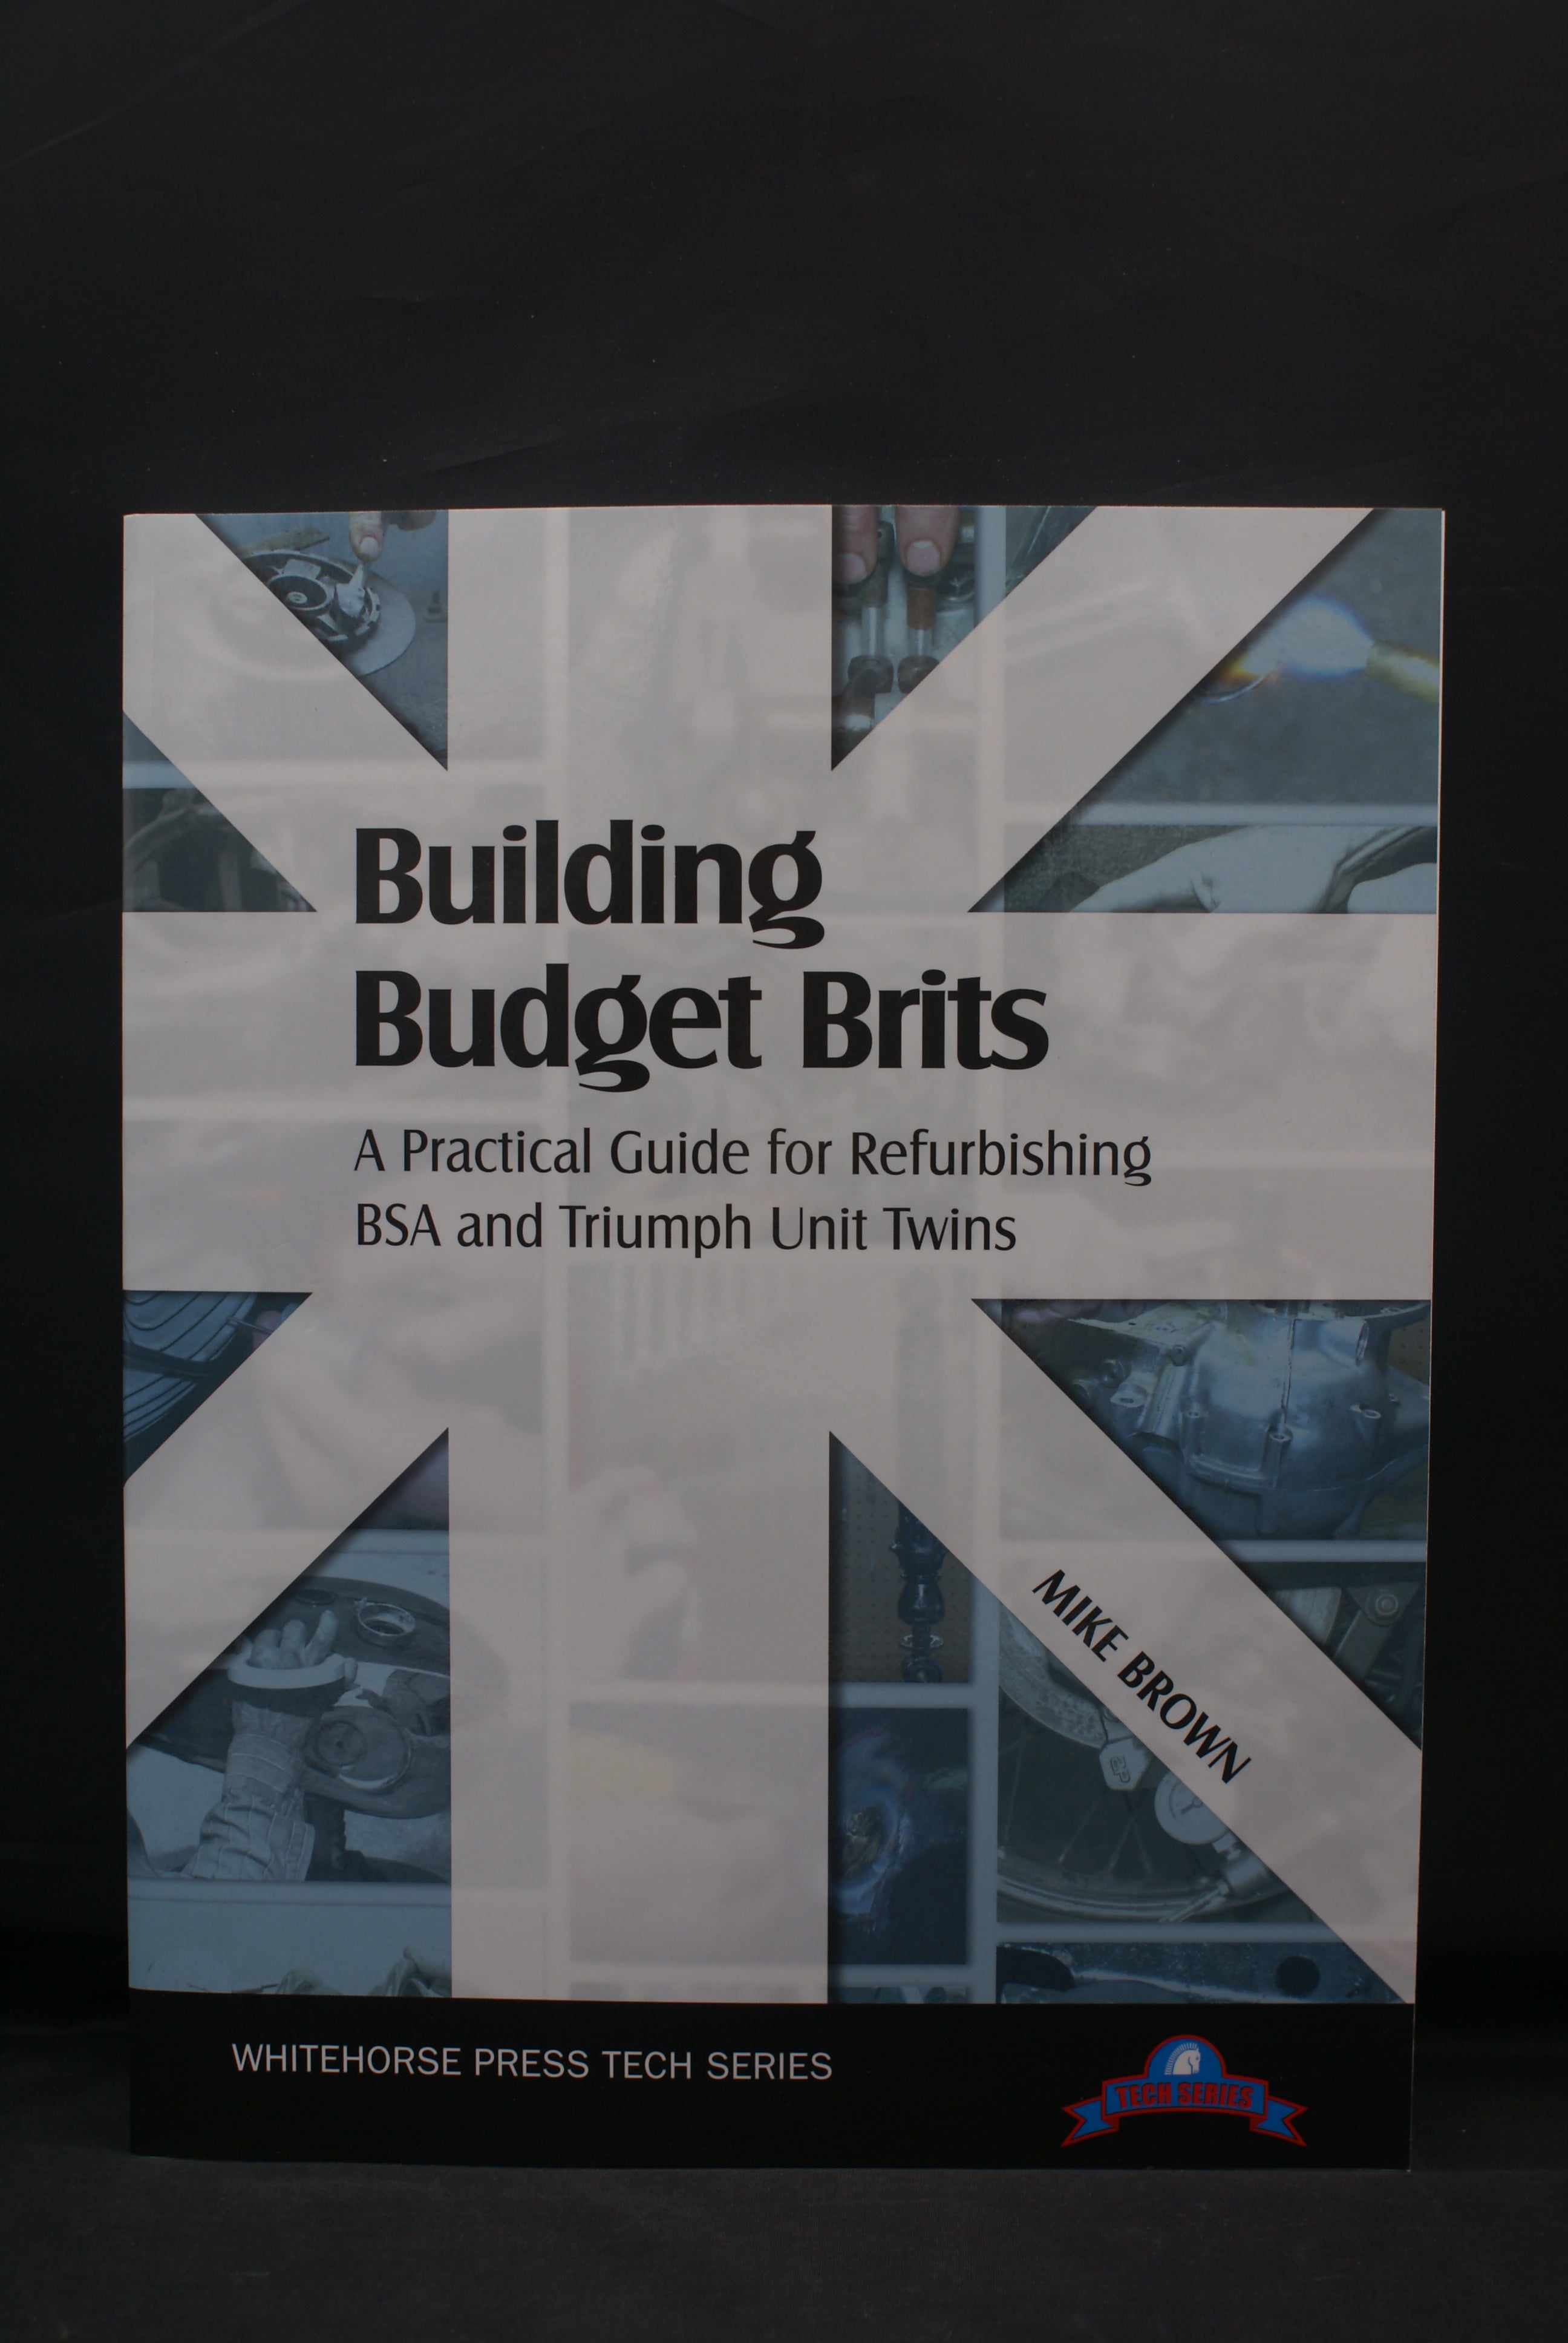 BSA, Triumph, Building Budget Brits